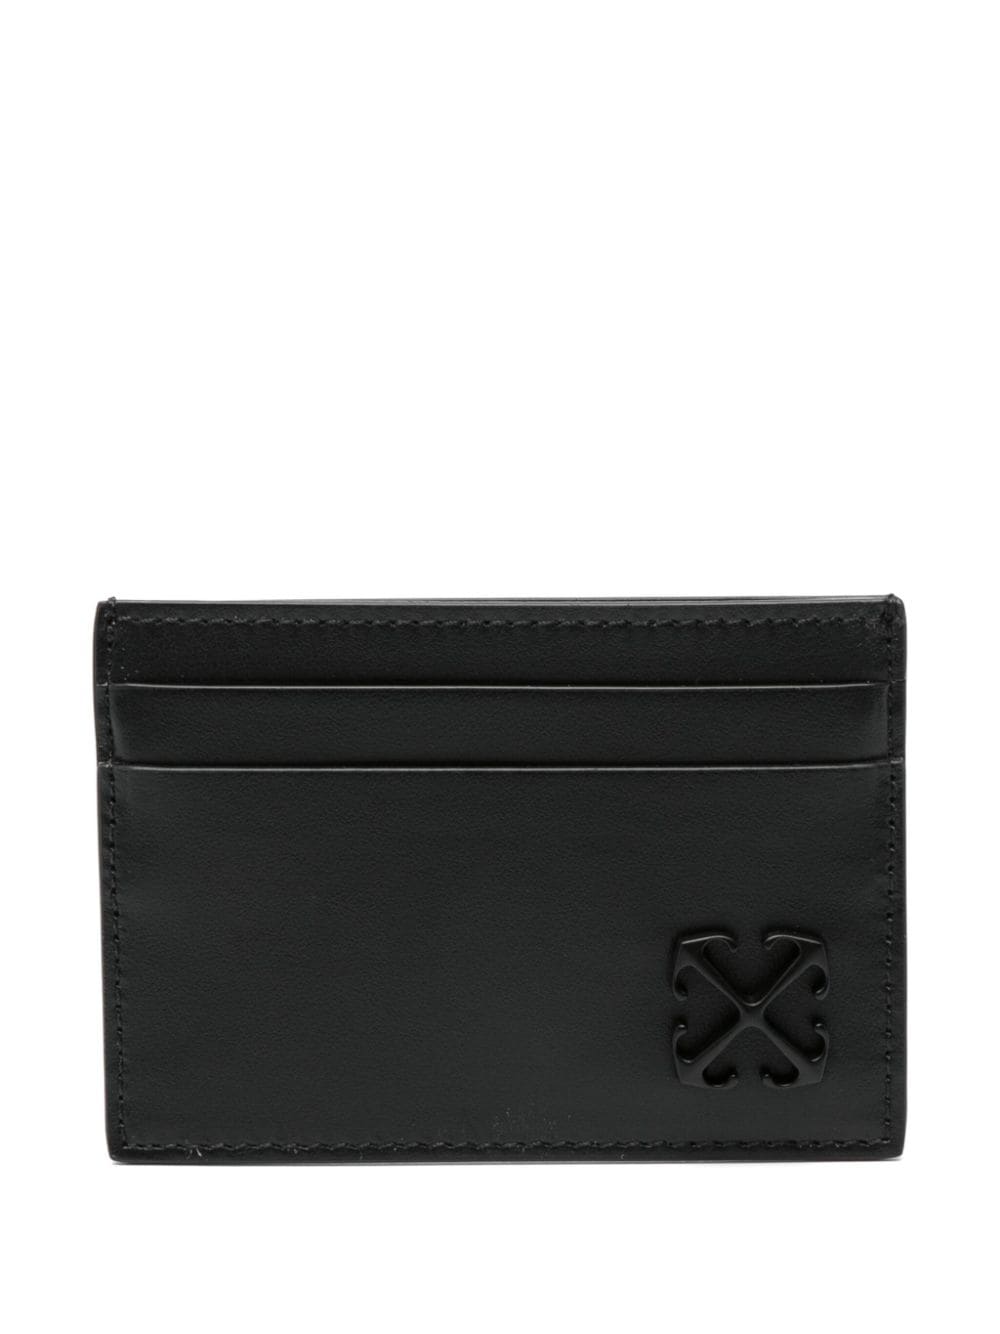 Off-White Jitney leather cardholder - Black von Off-White